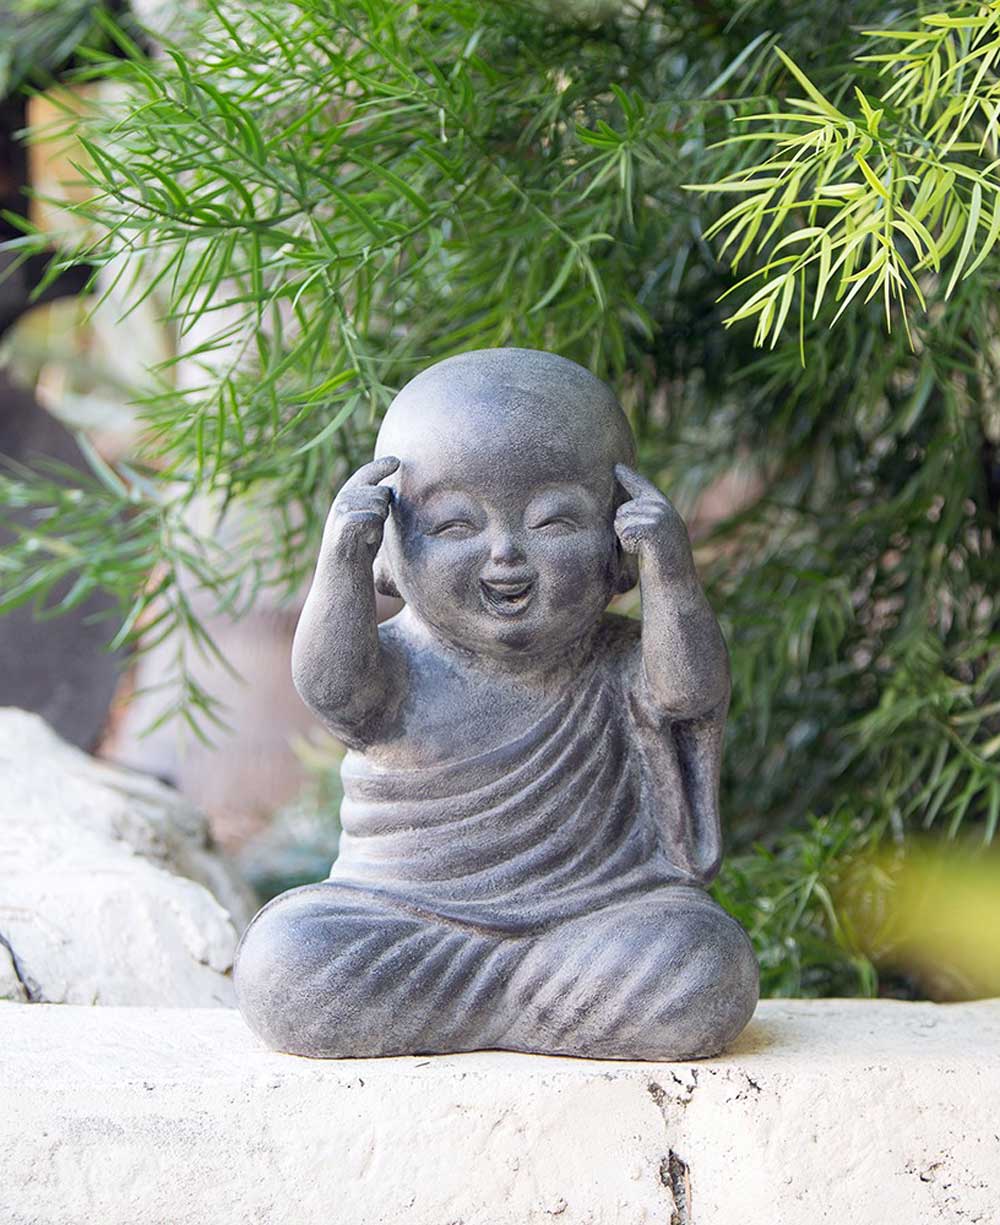 Enlightened Shaolin Monk Garden Statue, 16 Inches - Sculptures & Statues